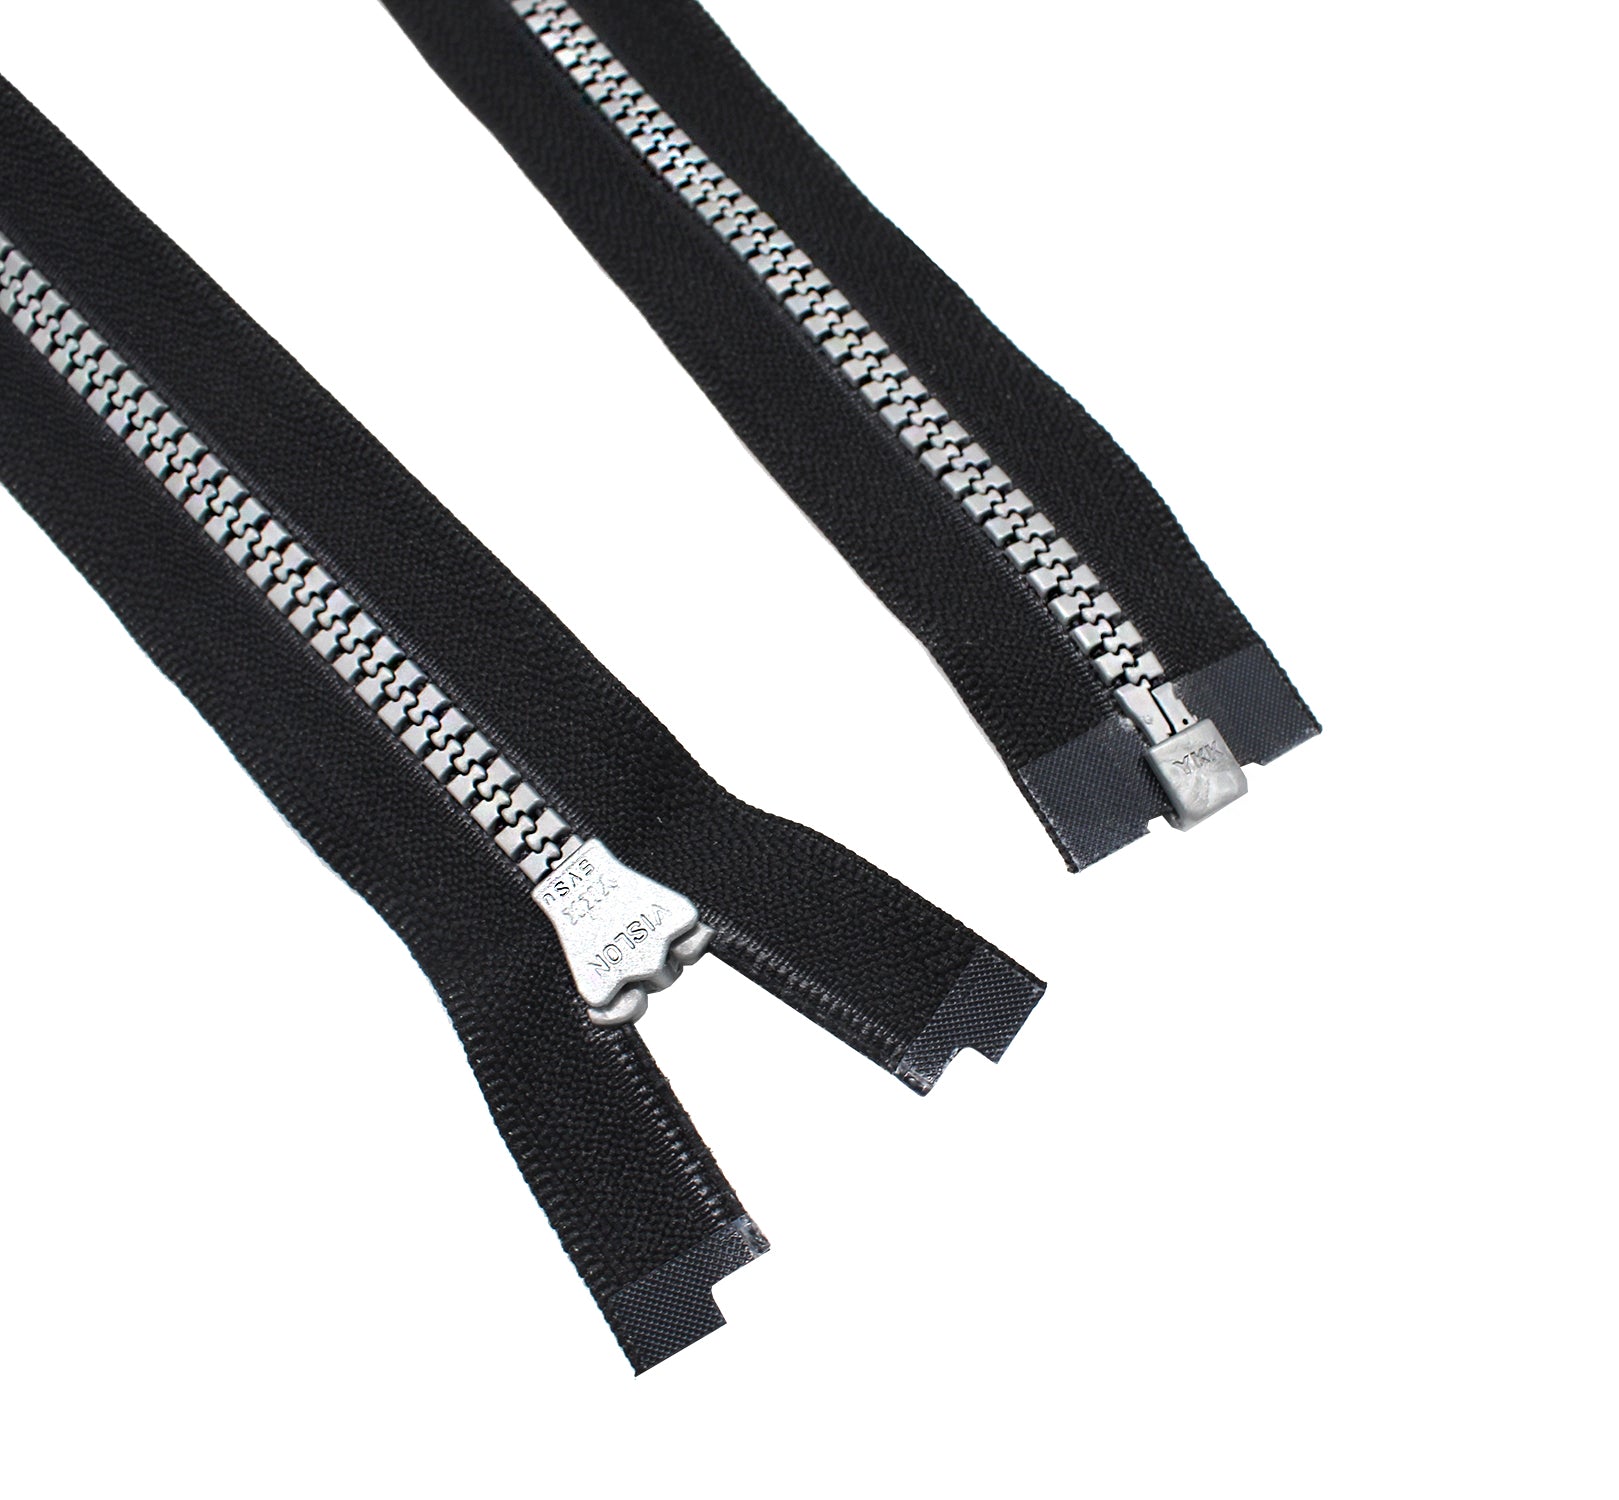 YKK #5 Medium Weight Aluminum Separating Zipper - Non-Stock Colors